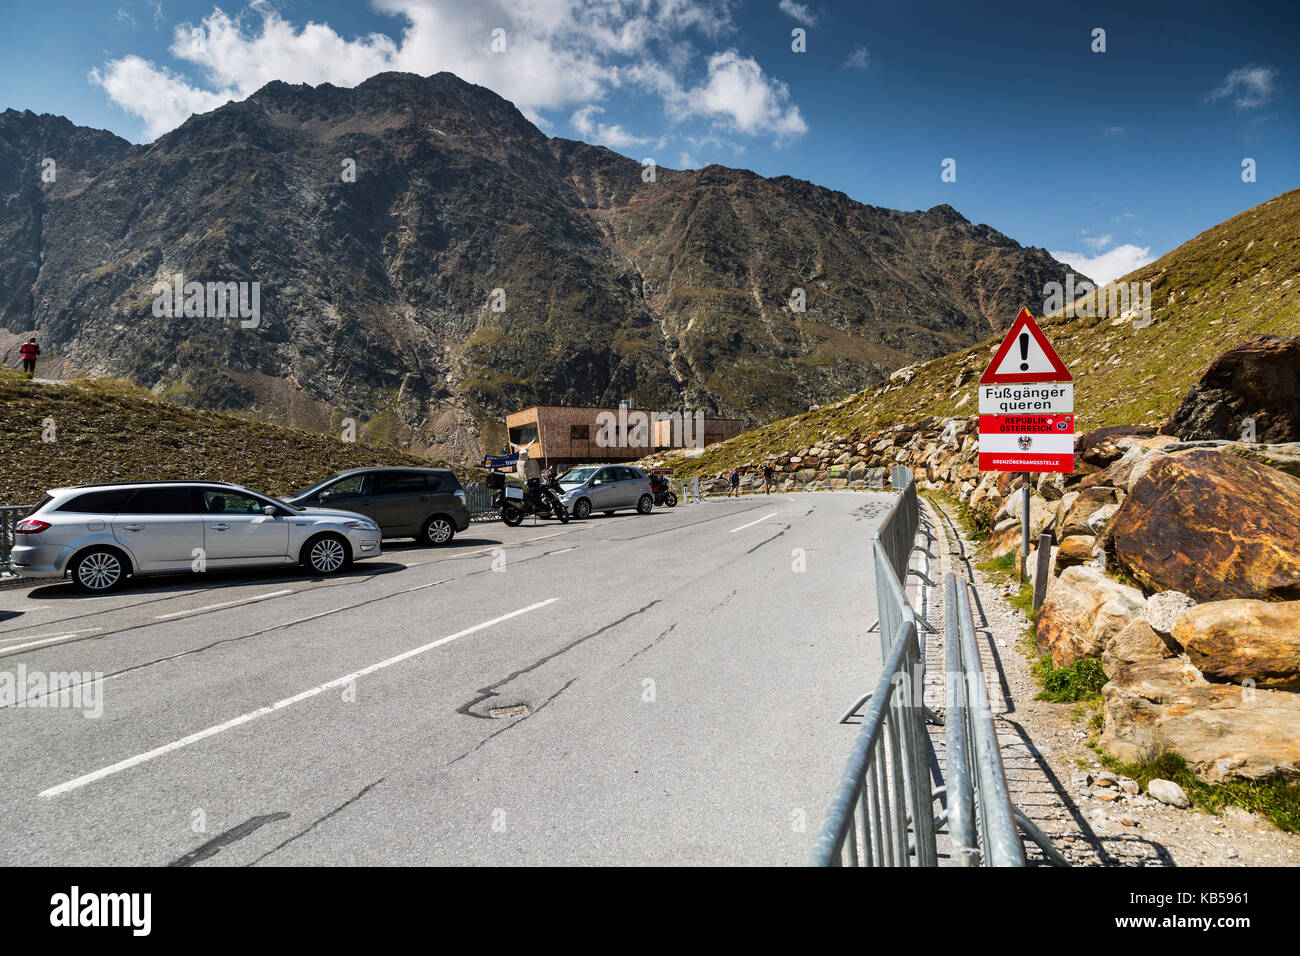 Europa, Austria/Italia, Alpes, Montañas - Passo Rombo - Timmelsjoch Foto de stock